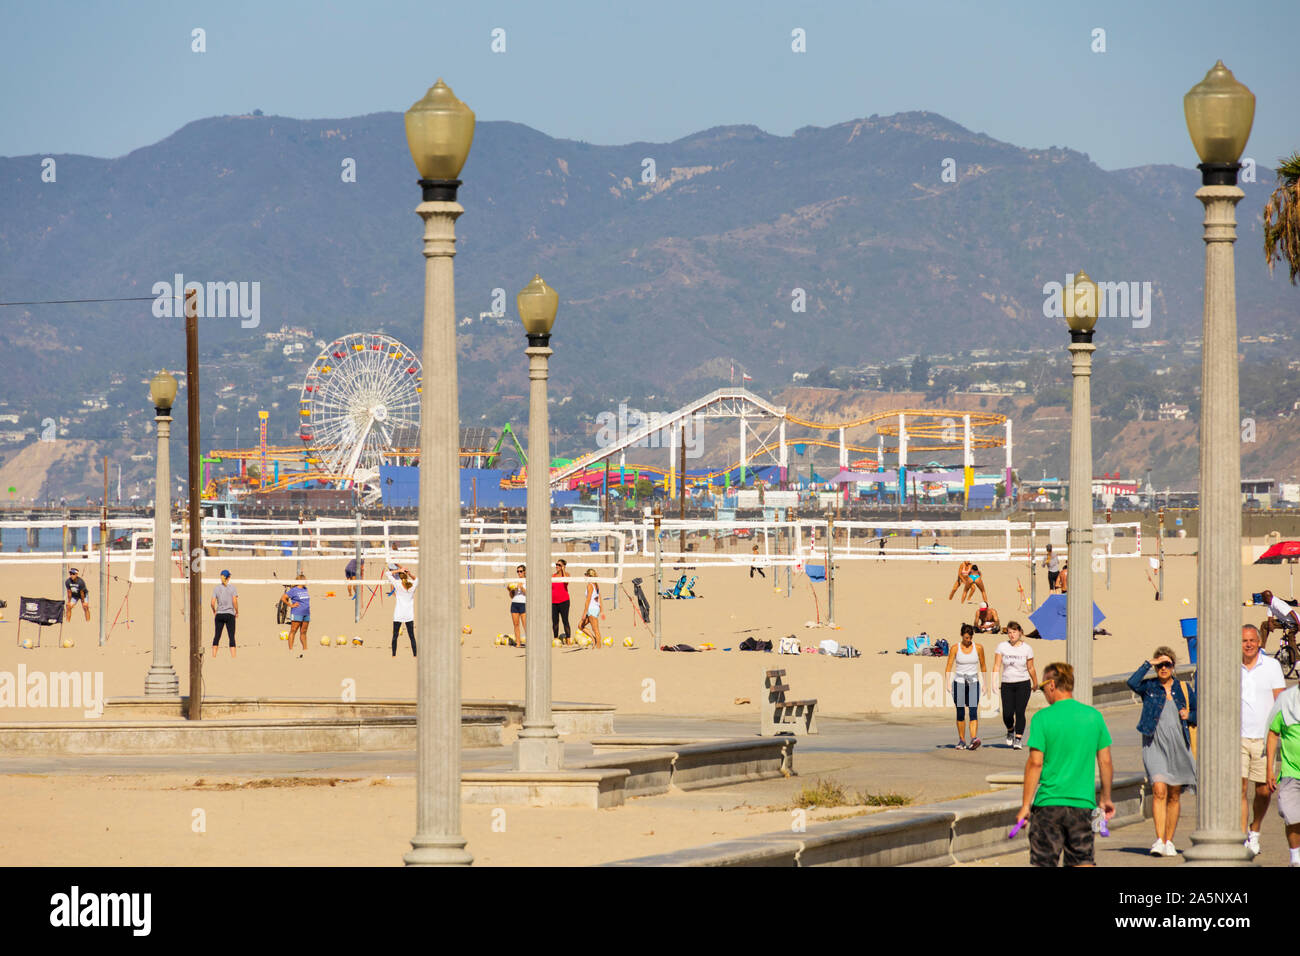 Volleyball players on Santa Monica beach, California, United States of America. USA. October 2019 Stock Photo